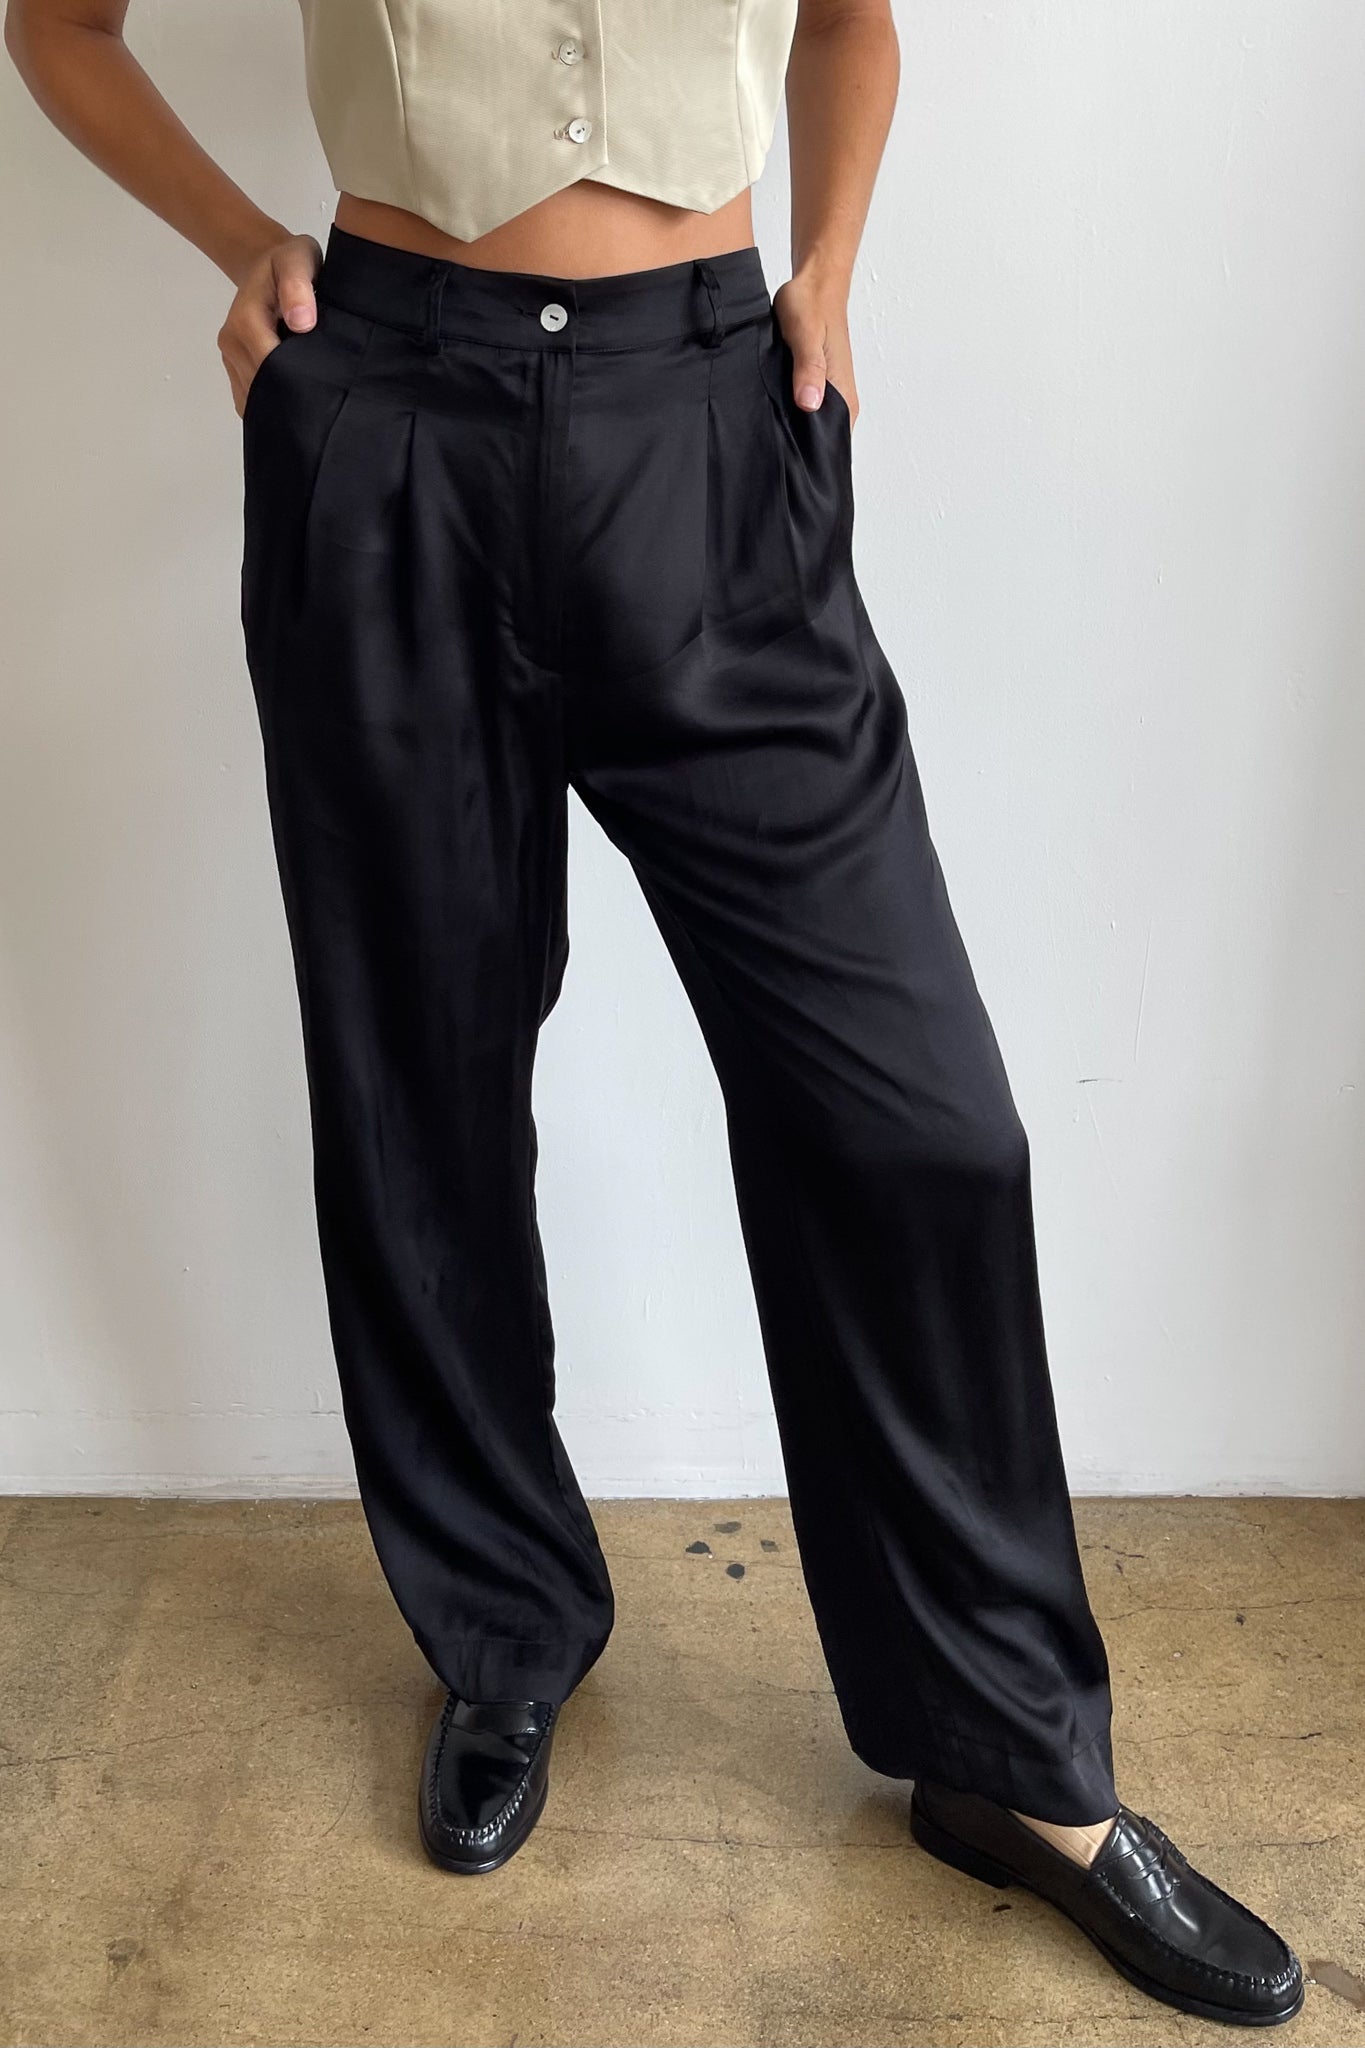 LASTINCH All Sizes Polka Dot Pleated Trouser with Belt XXS8XL